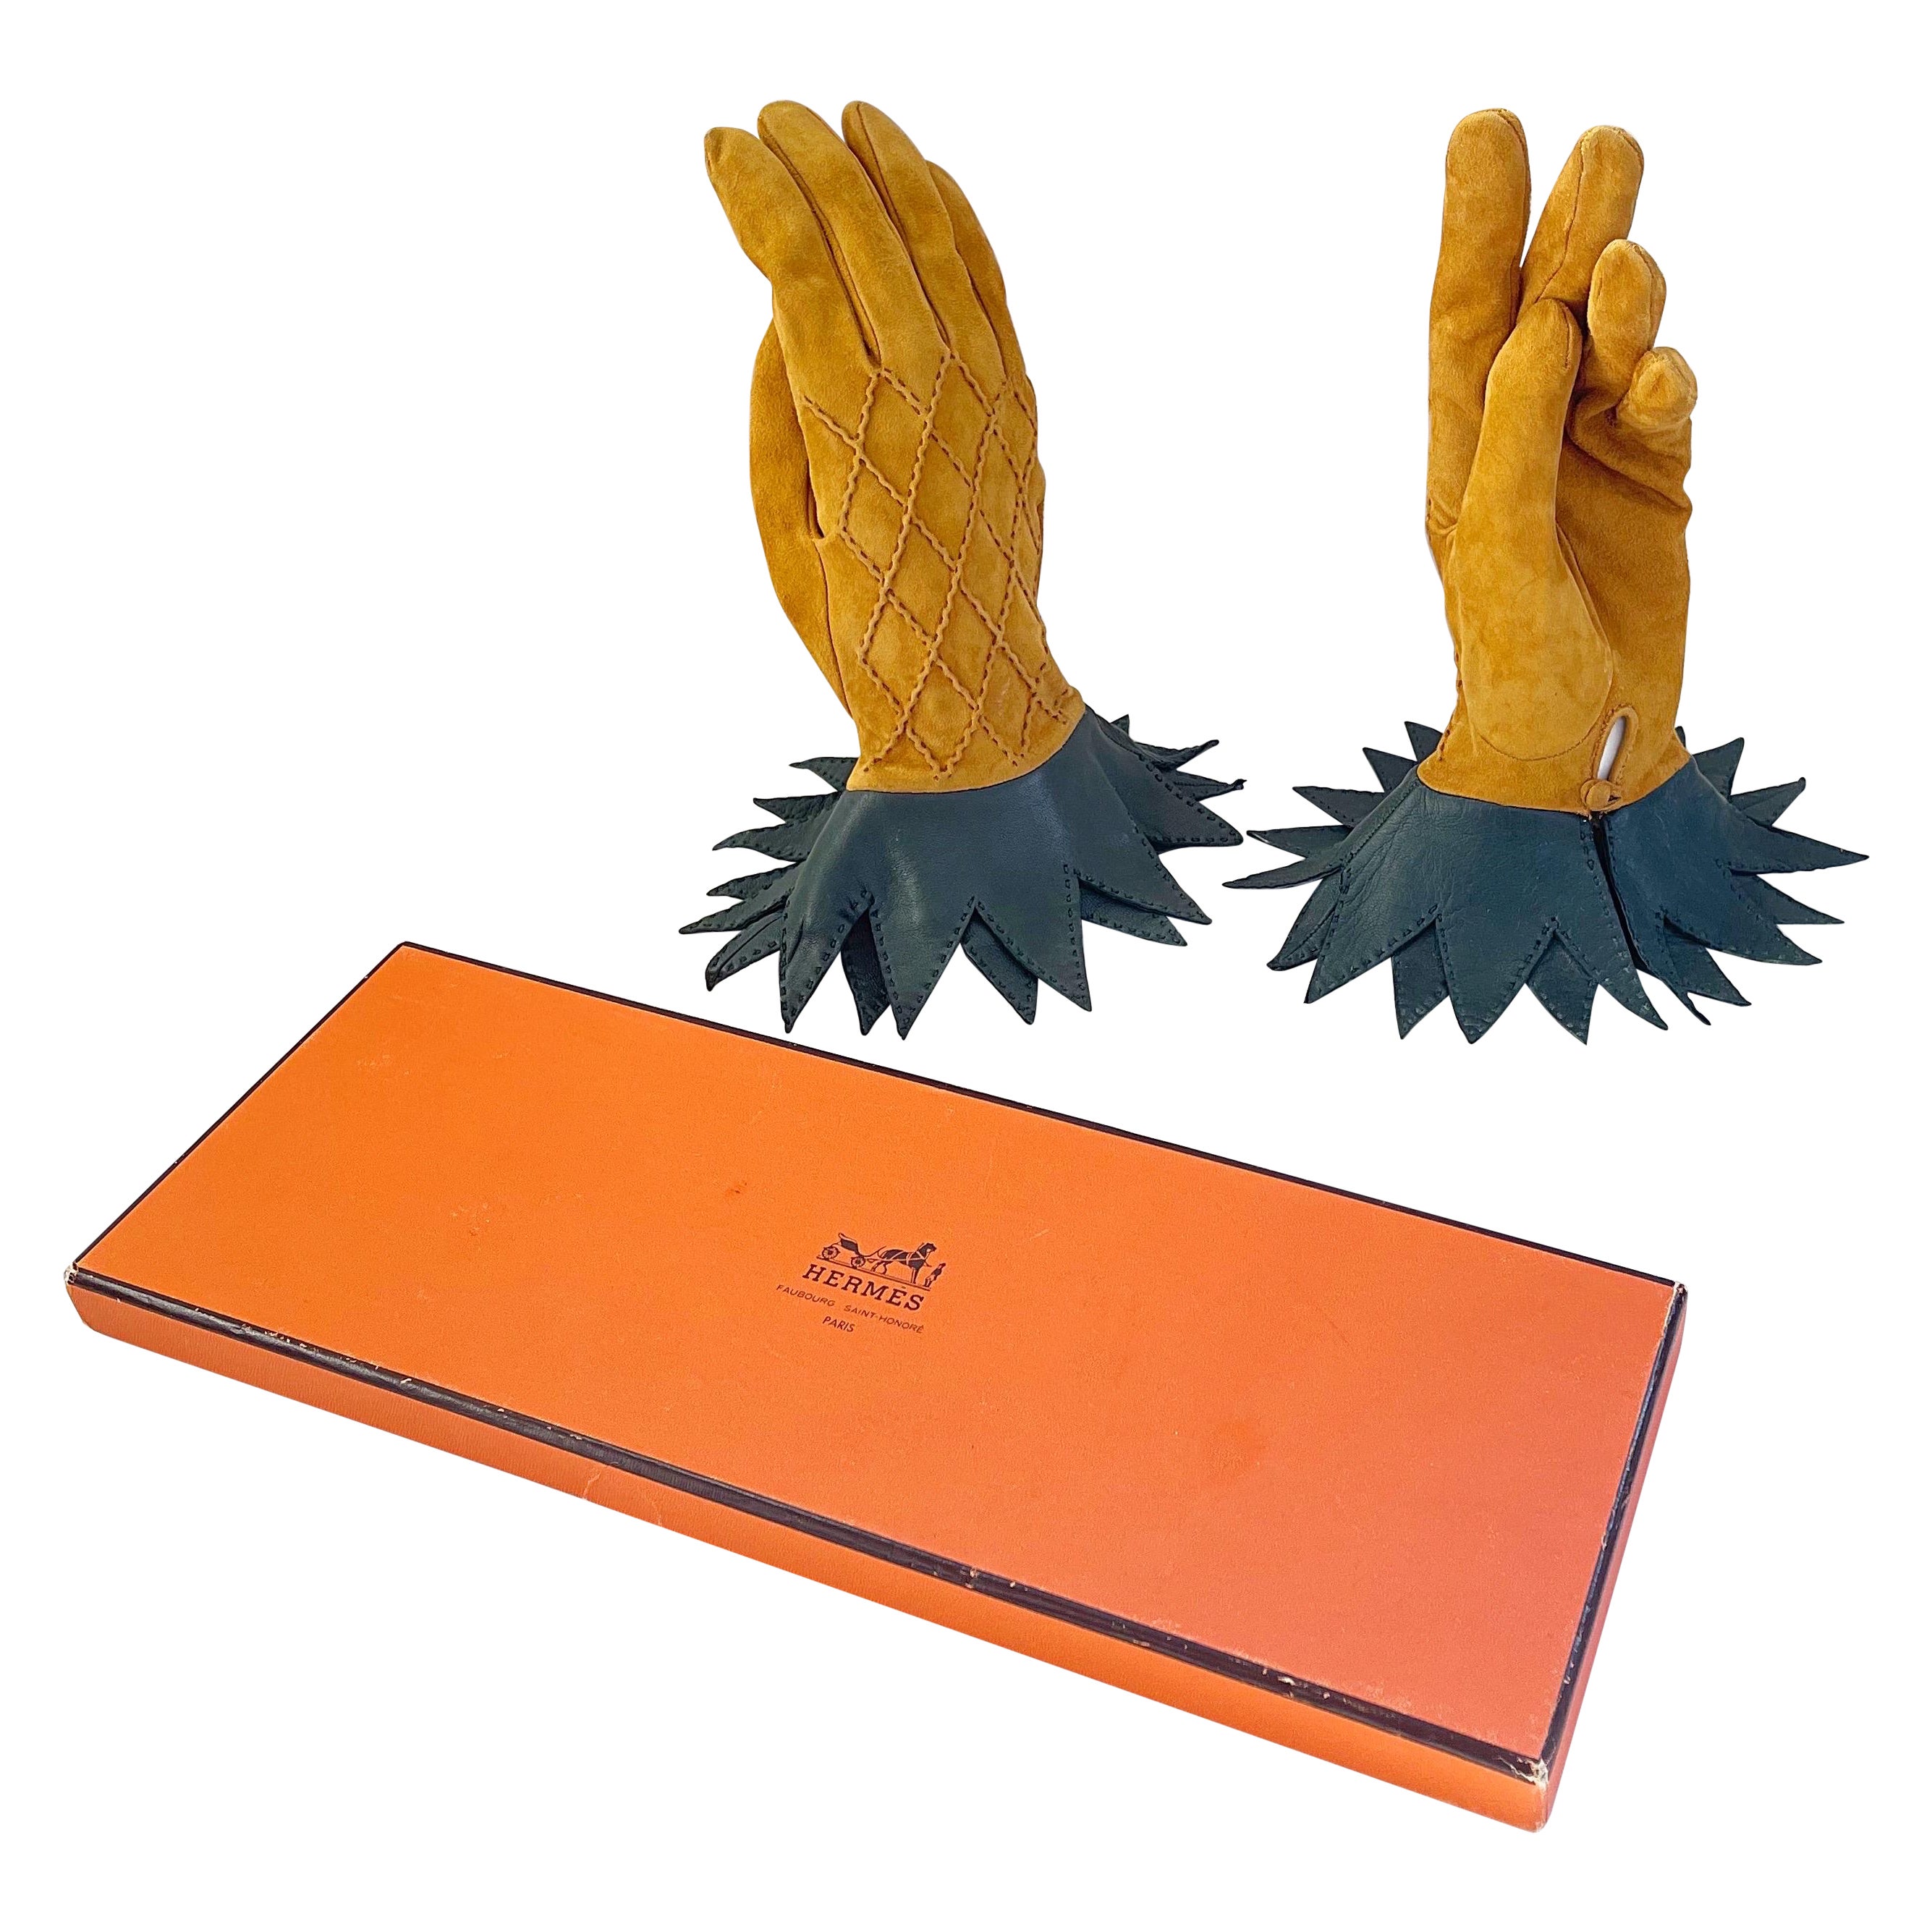 Hermès 1990s Vintage Pineapple Novelty Suede Leather Size 7.5 90s Gloves For Sale